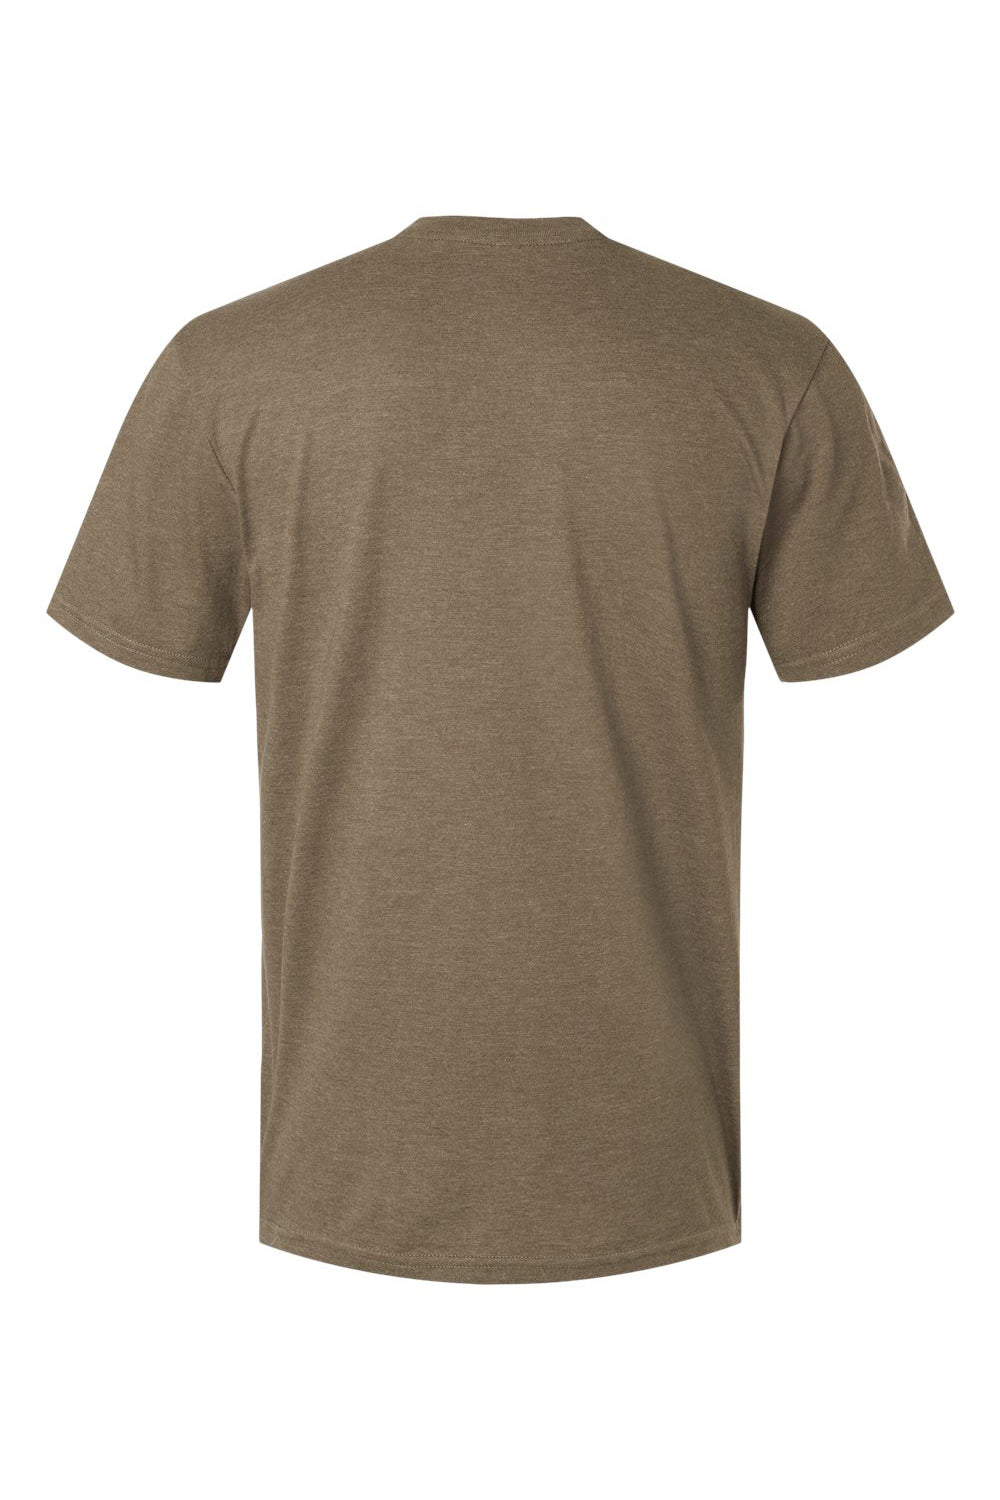 American Apparel 2004CVC Mens CVC Short Sleeve Henley T-Shirt Heather Army Flat Back